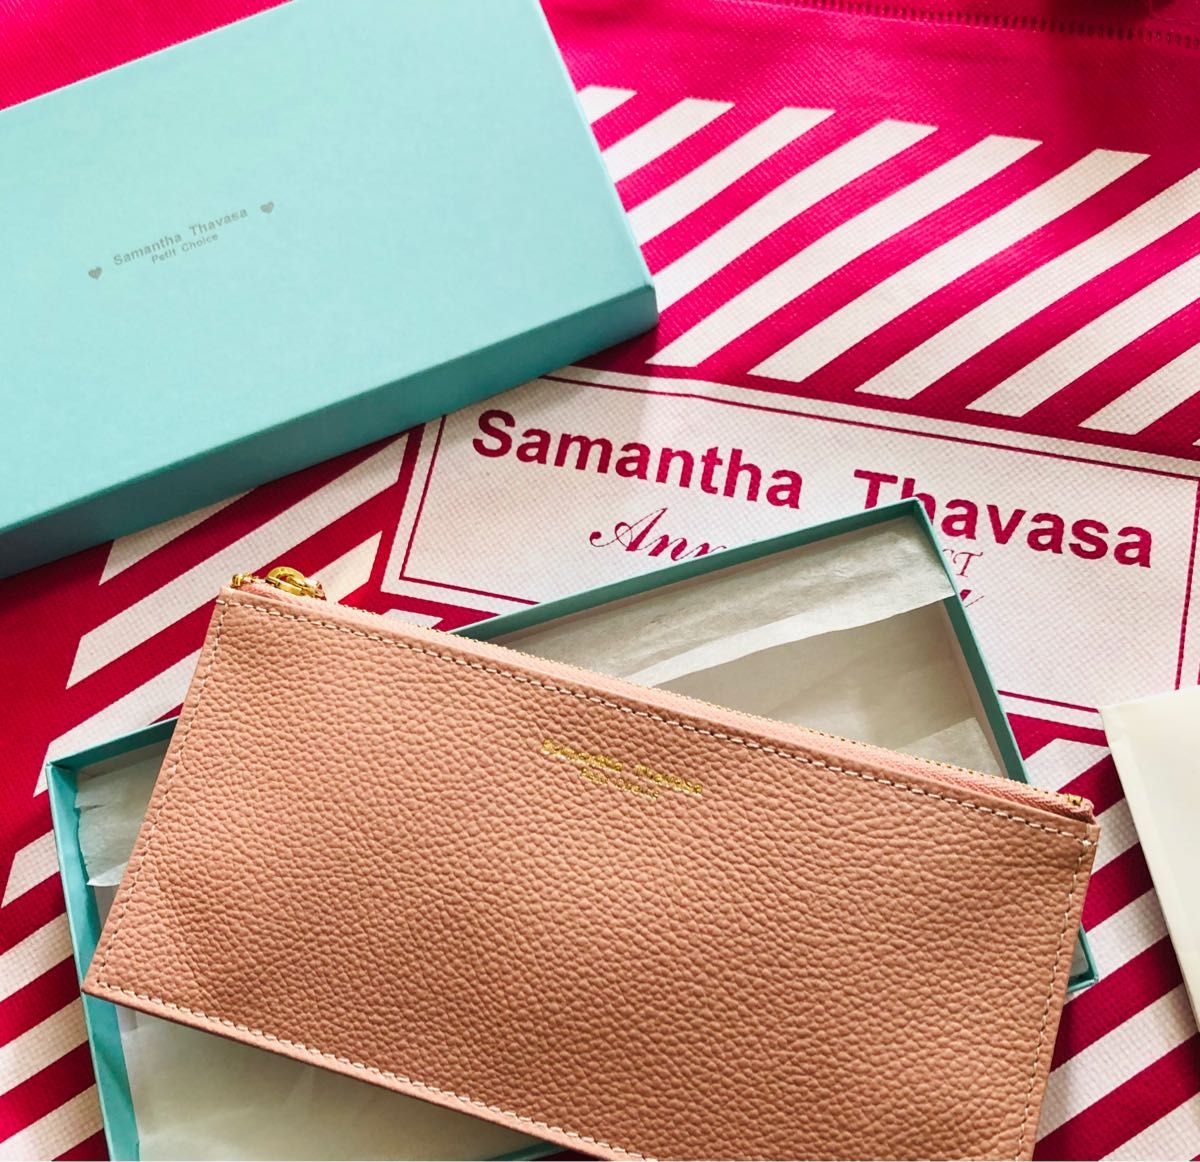 Samantha Thavasa サマンサタバサ 財布 三つ折り財布 折り財布 ミニ